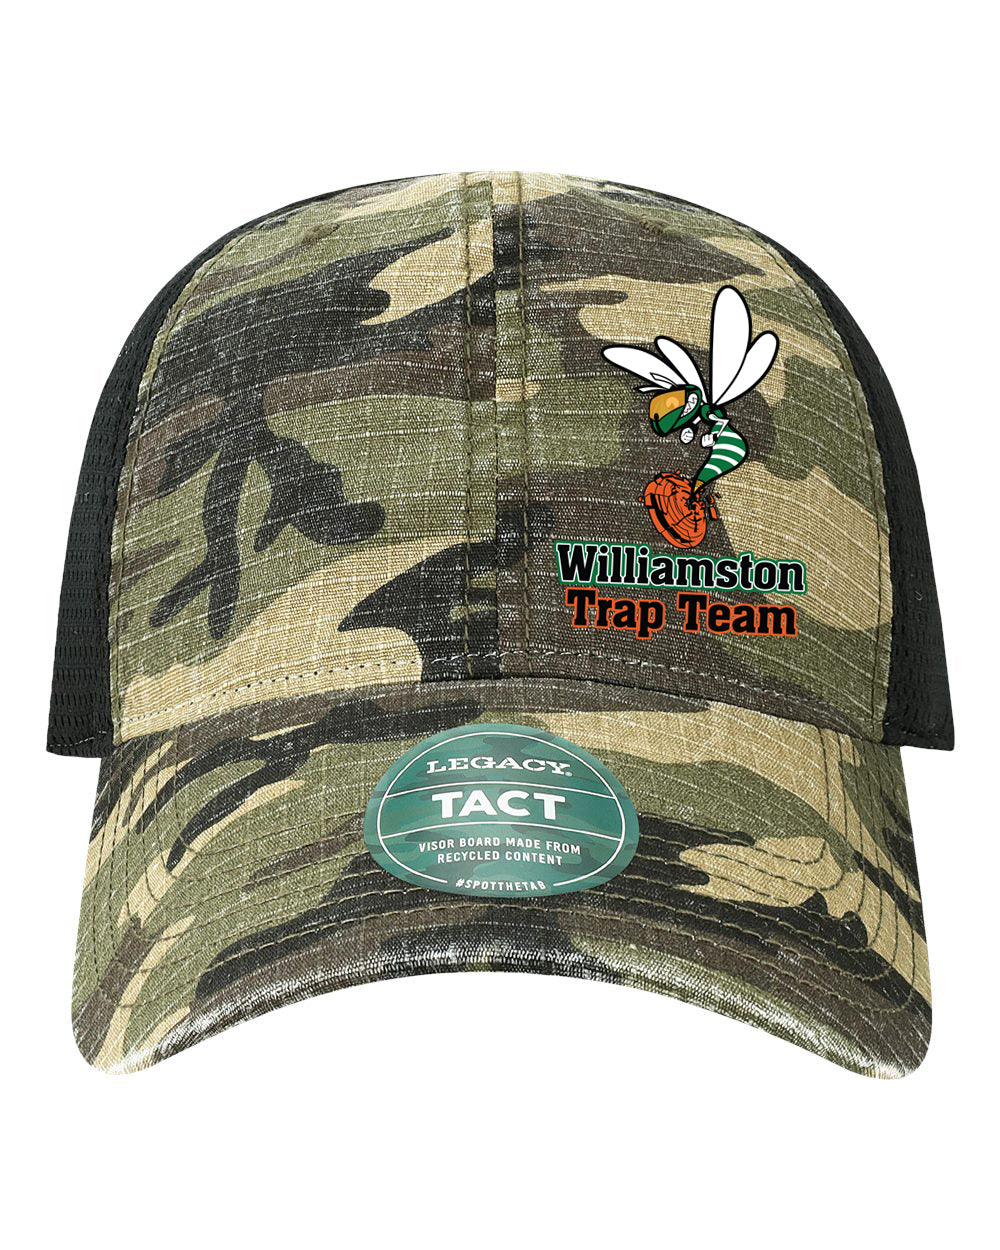 Williamston Trap Team - Hats